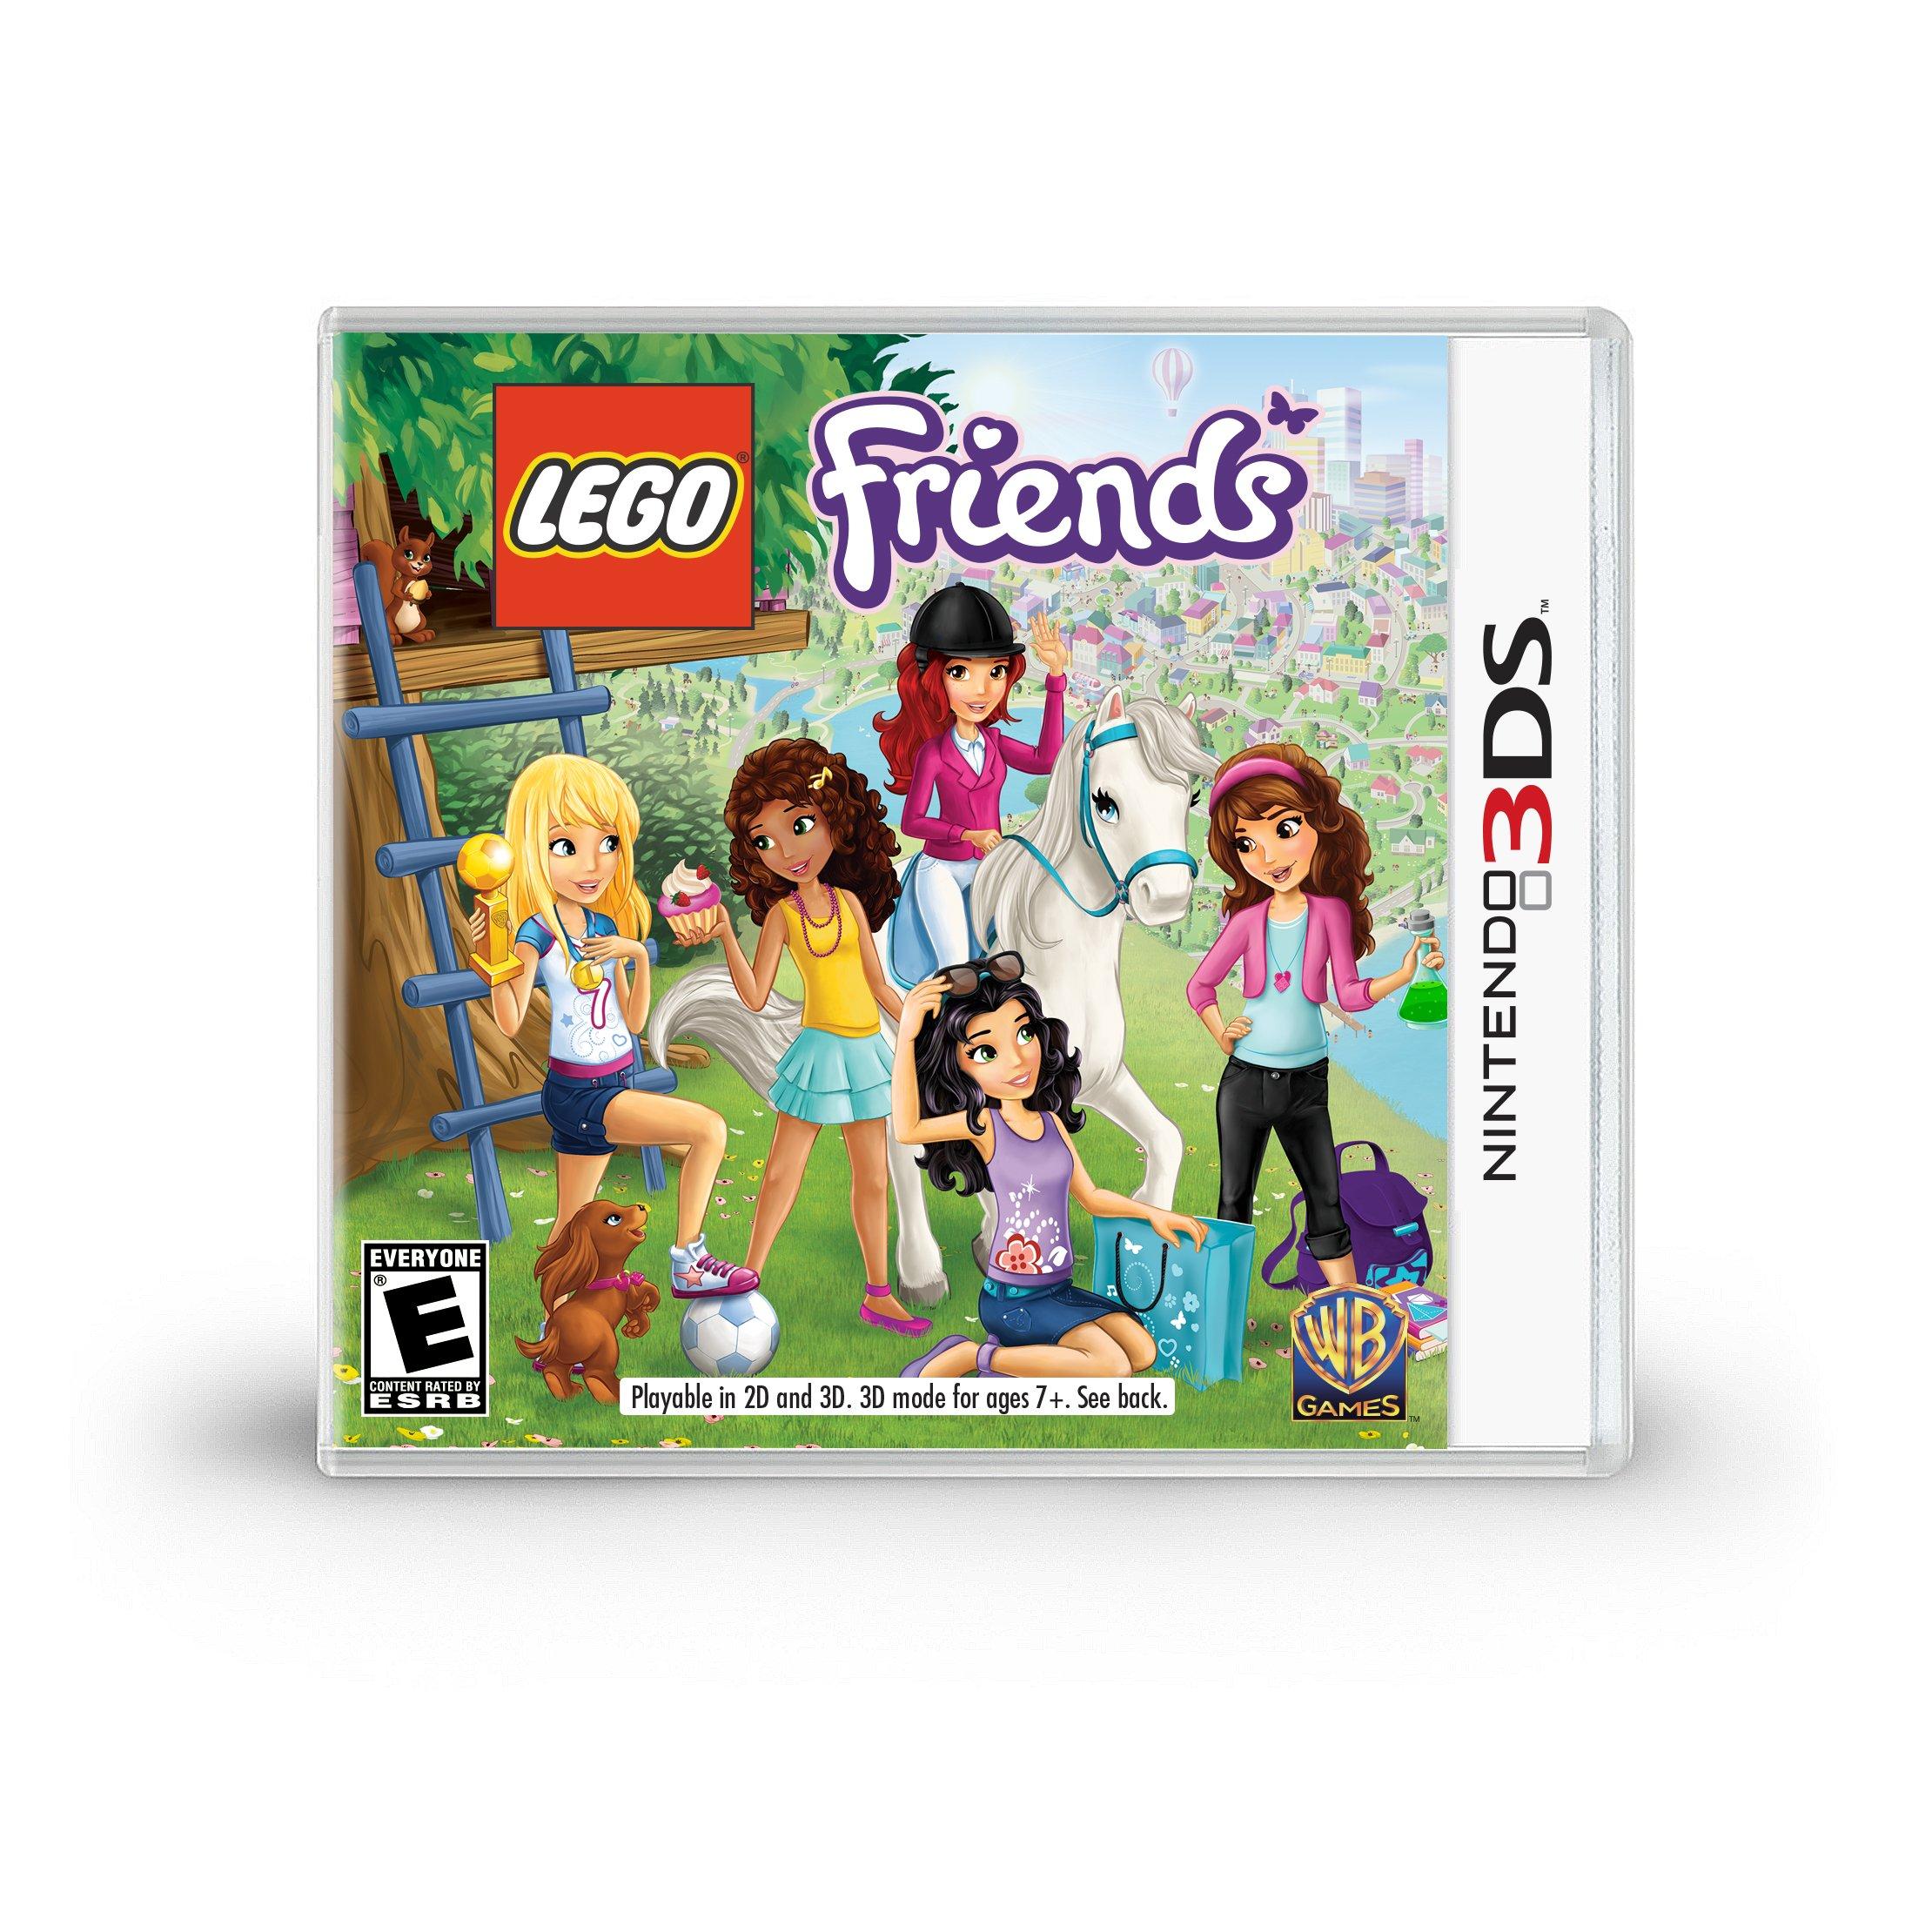 Ni Logisk hjerte LEGO Friends - Nintendo 3DS | Nintendo 3DS | GameStop